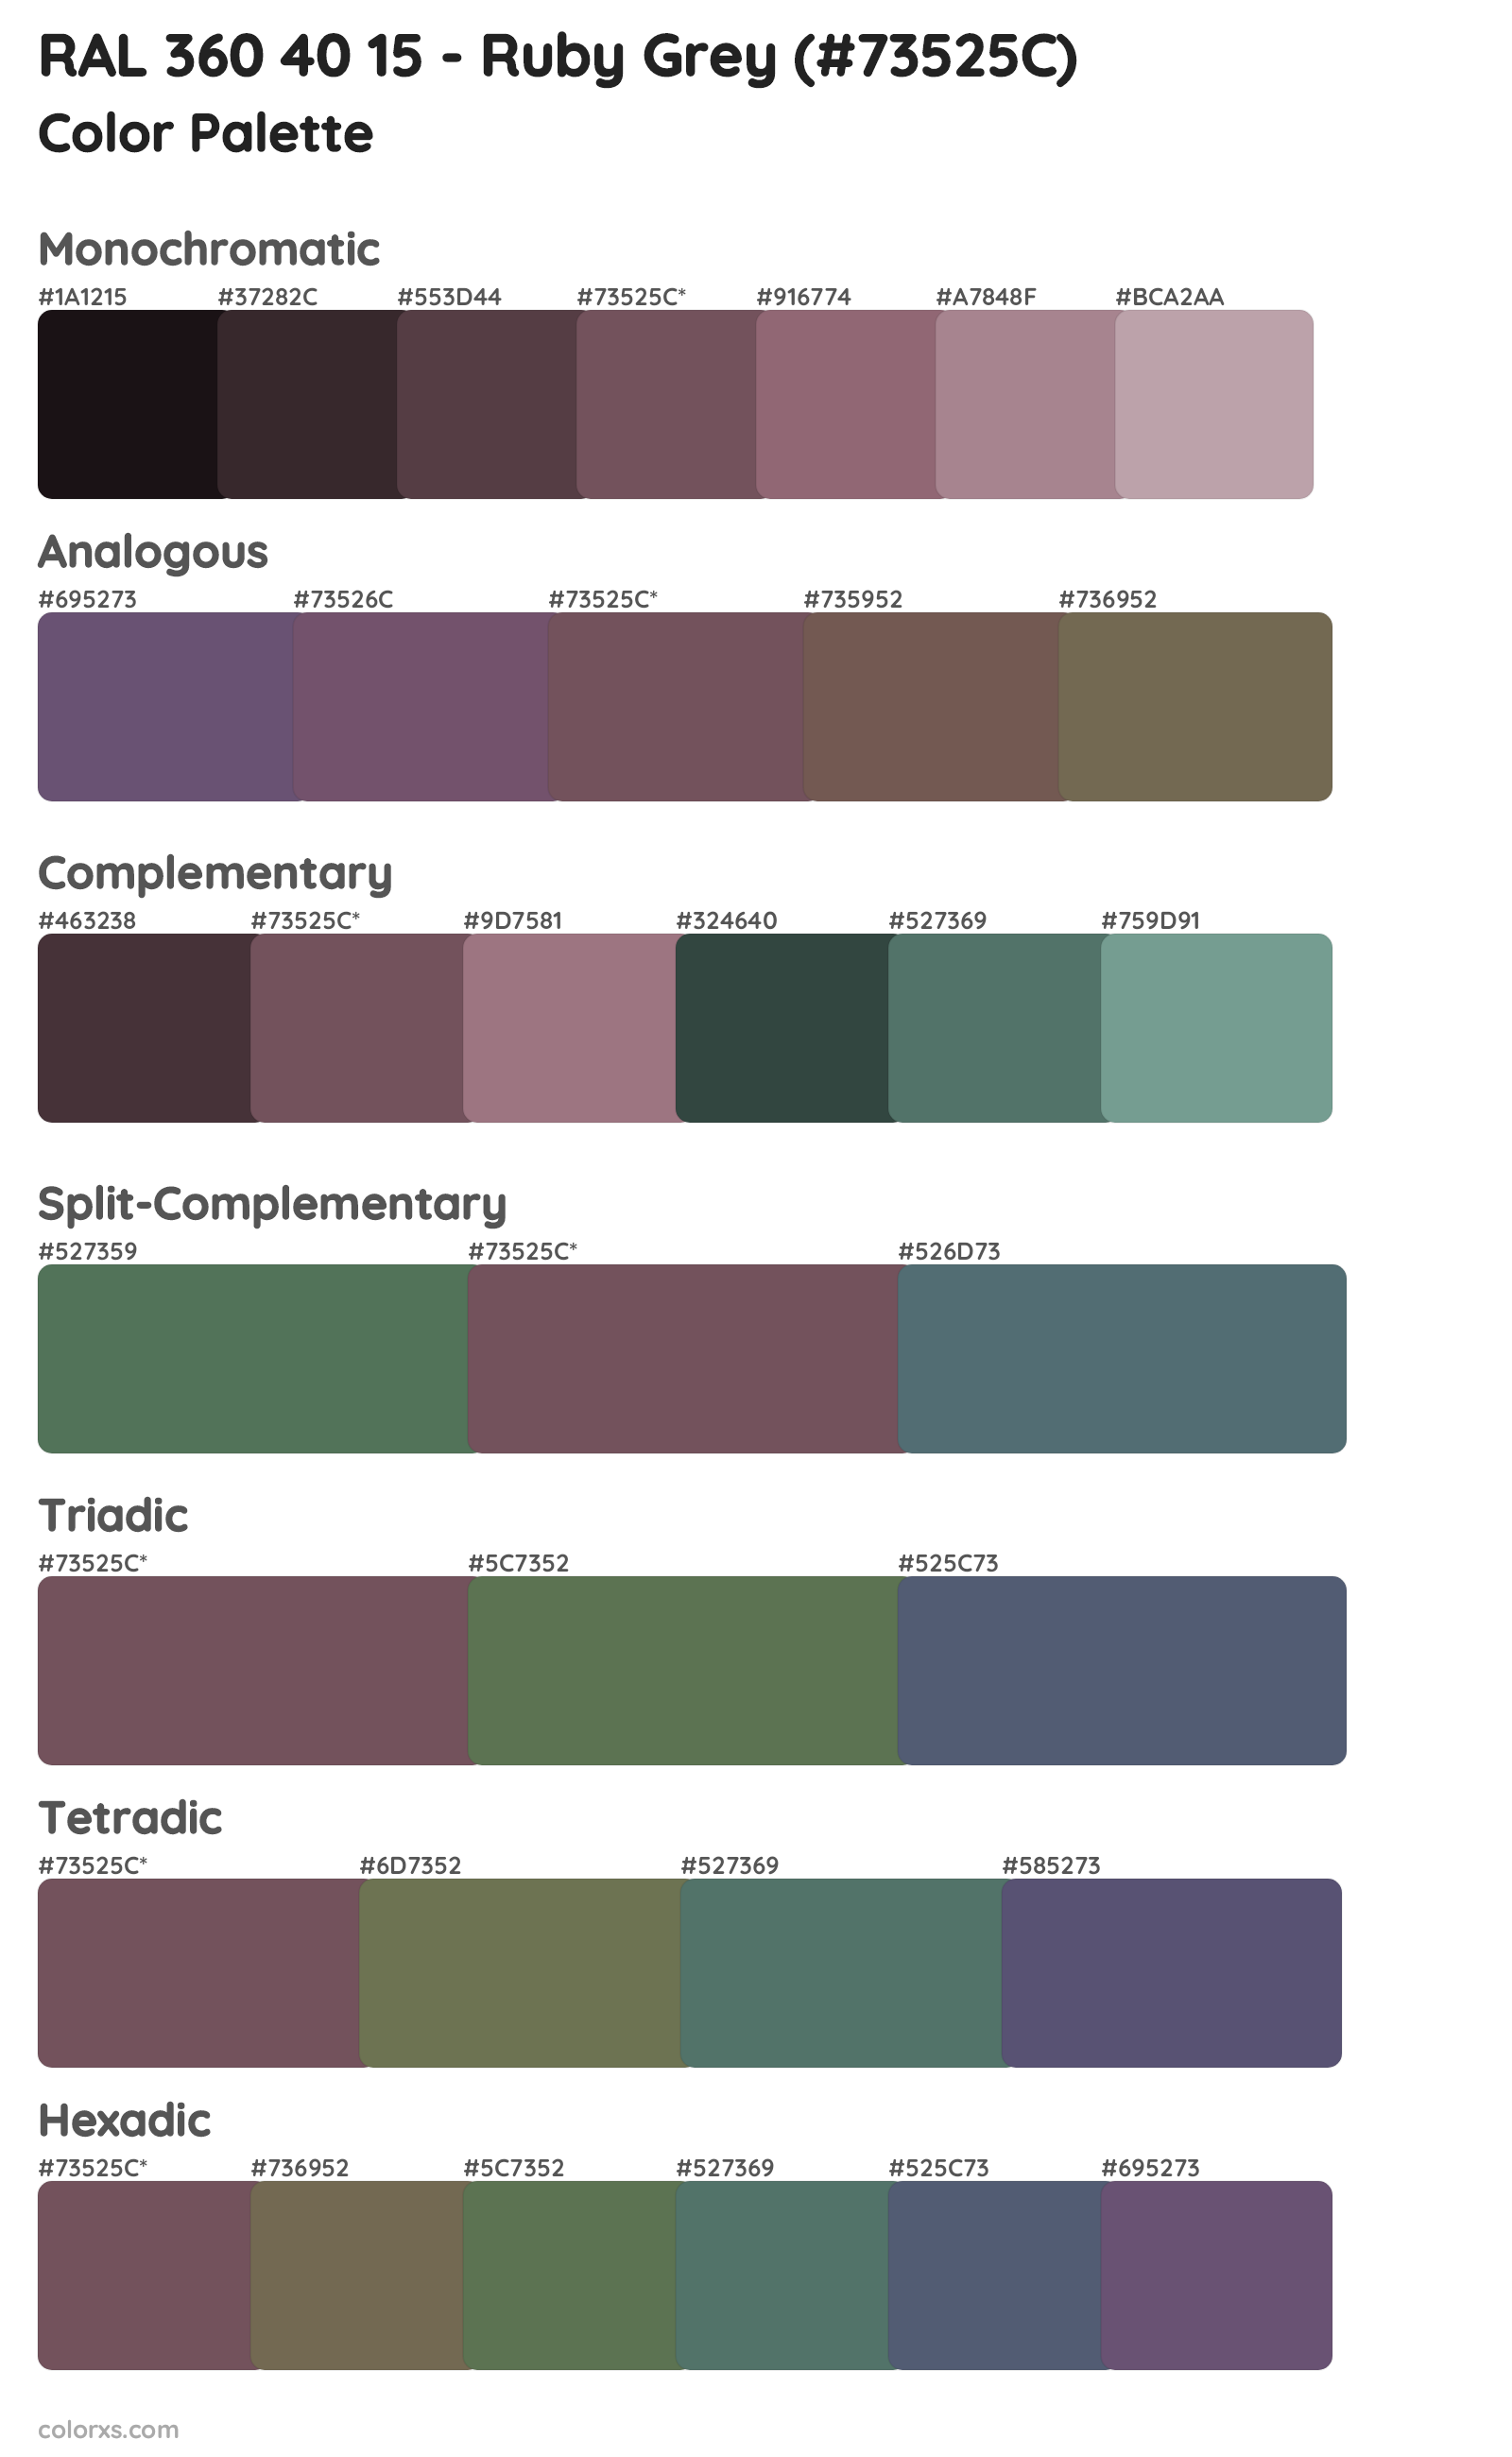 RAL 360 40 15 - Ruby Grey Color Scheme Palettes